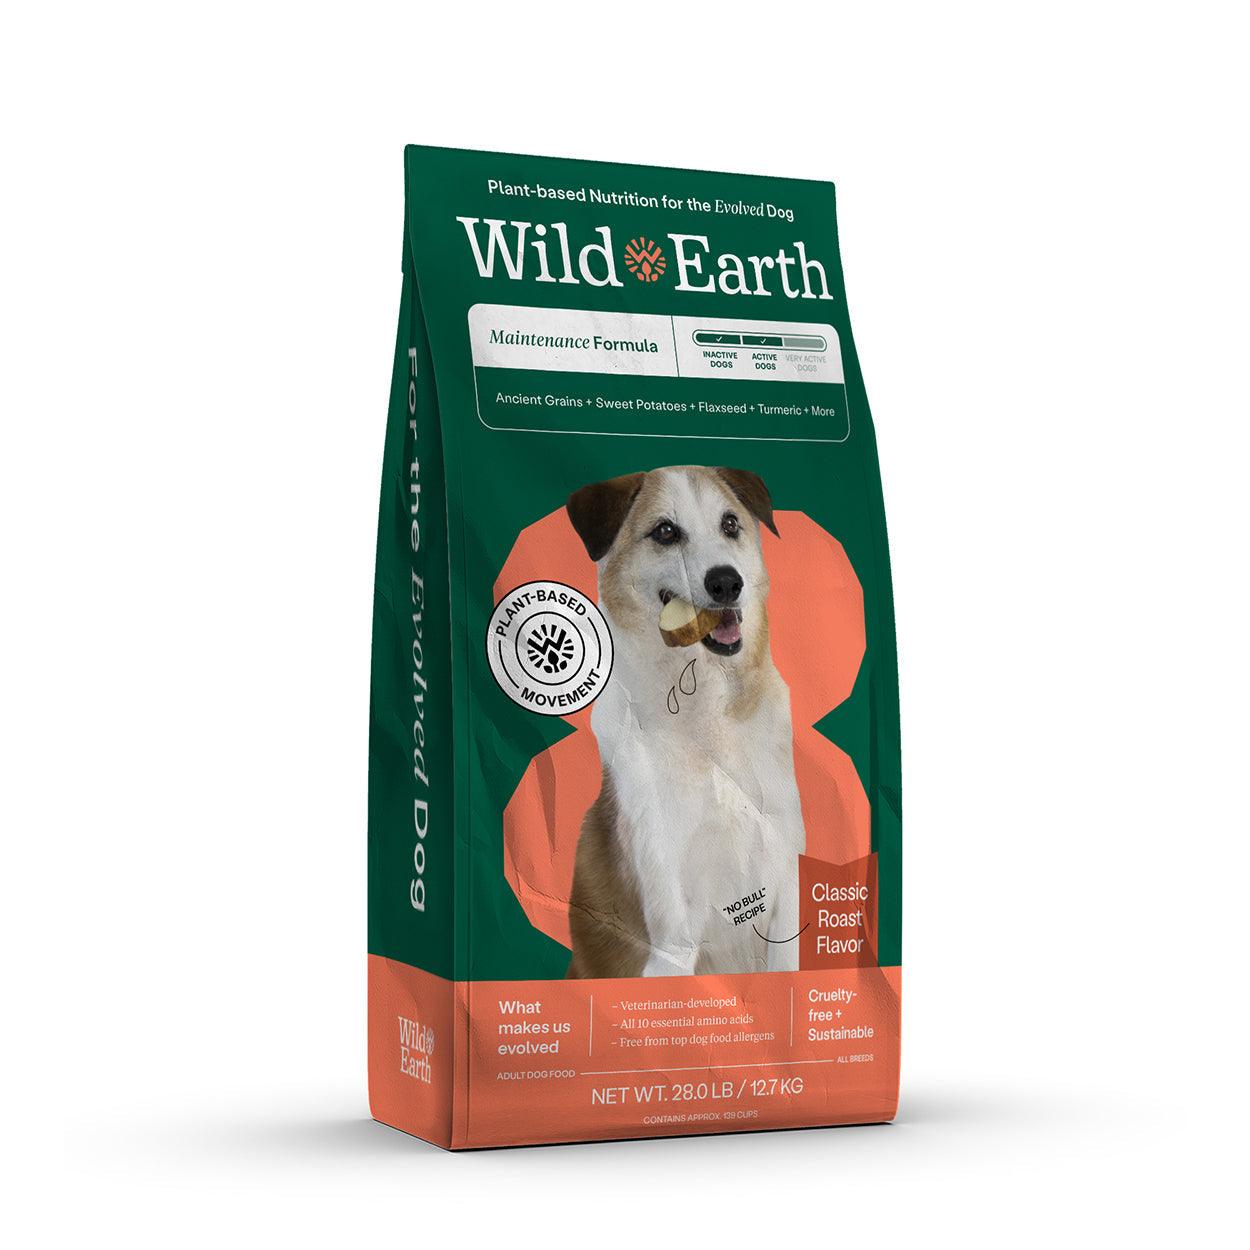 Maintenance Formula Dog Food by Wild Earth - The Hammer Sports